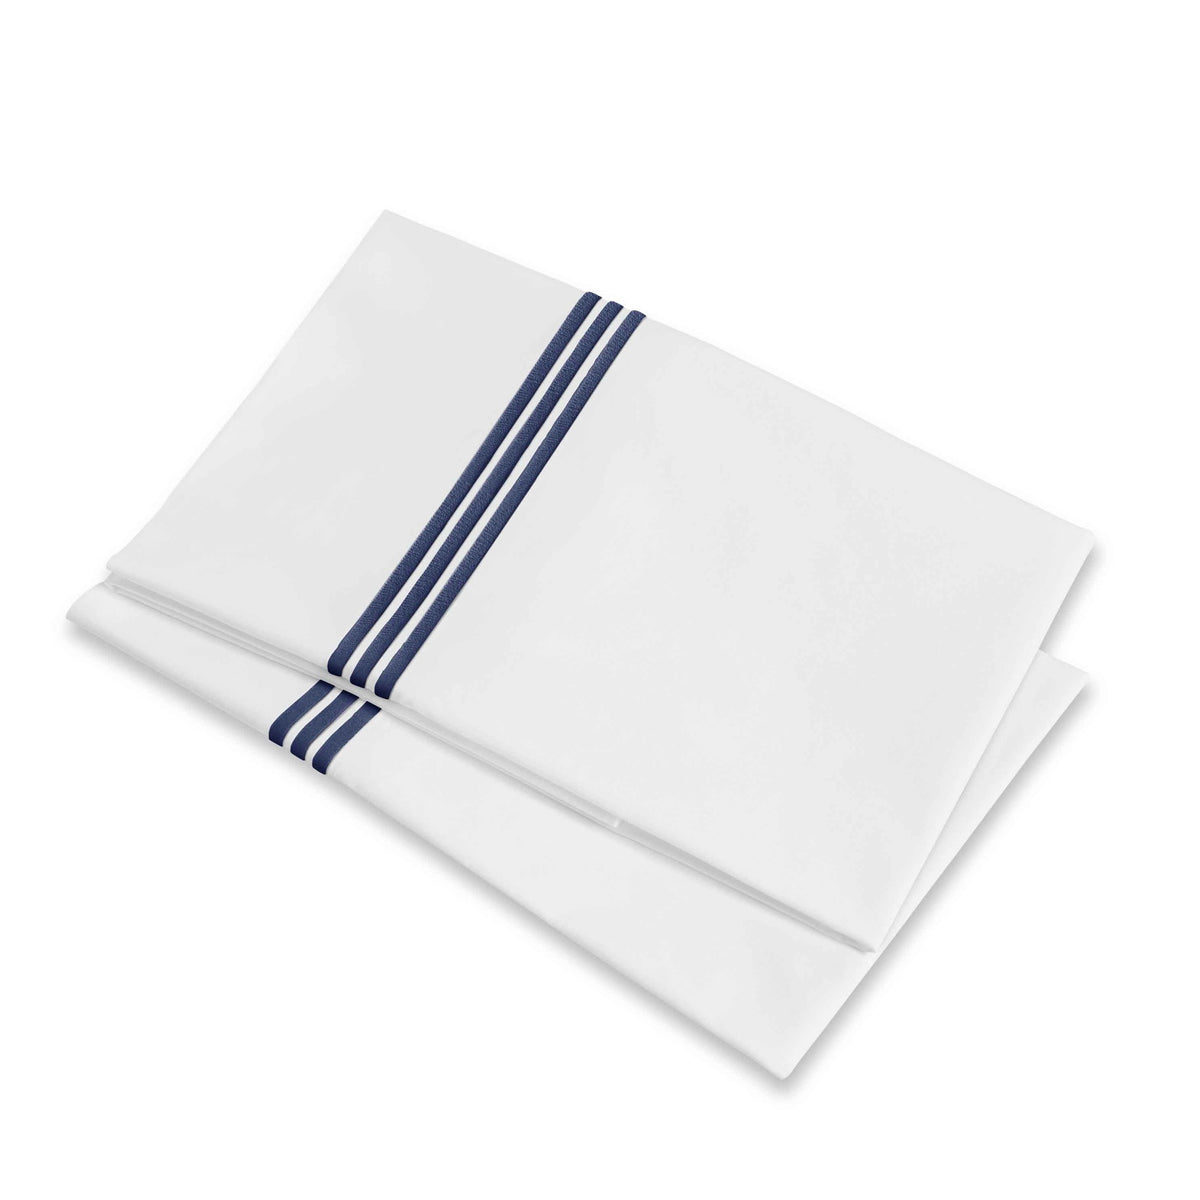 Folded Pillowcases of Signoria Platinum Percale Bedding in White/Dark Blue Color